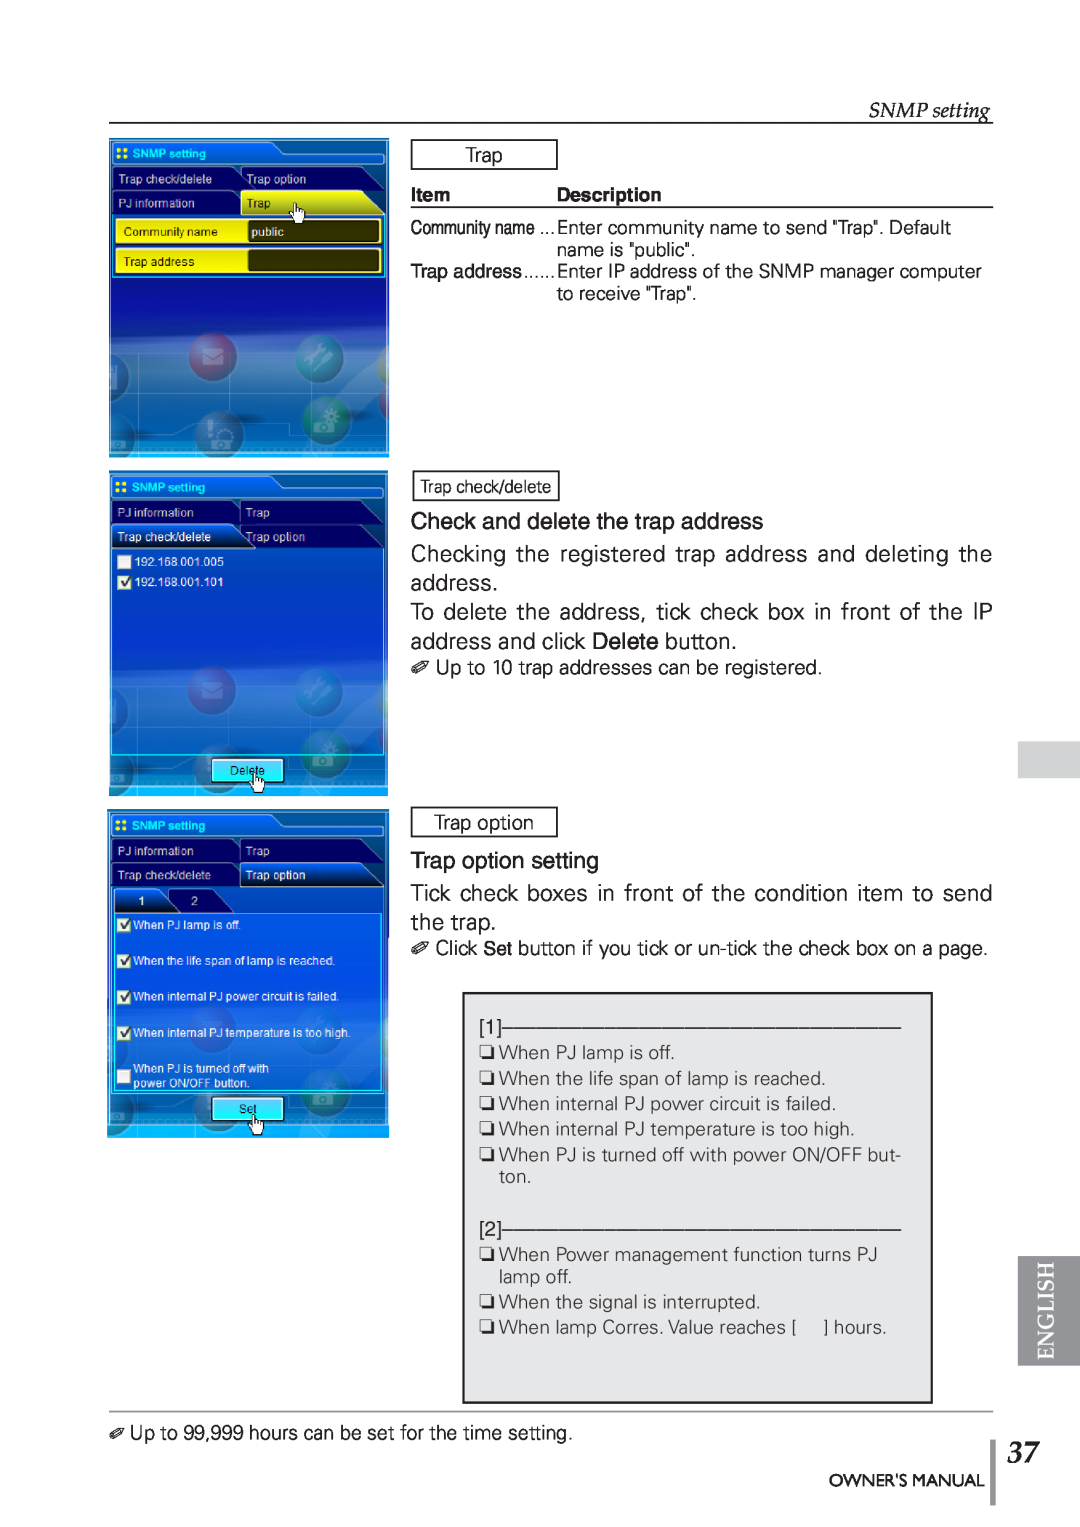 Eiki PJNET-300 owner manual Check and delete the trap address, Trap option setting, SNMP setting, English, Item Description 